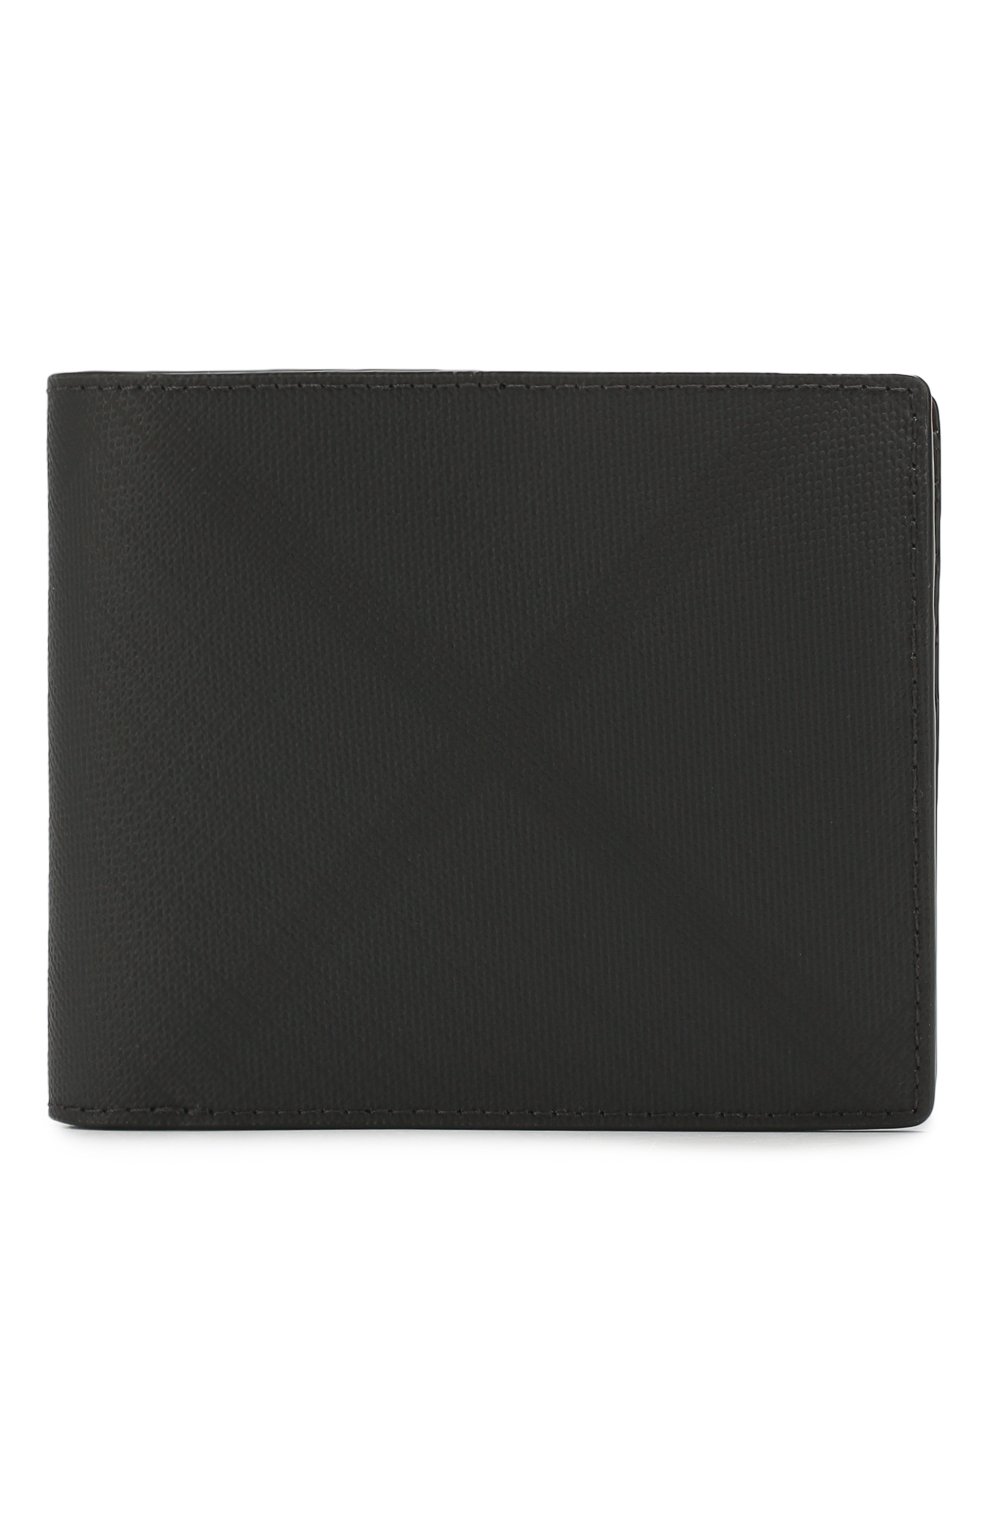 Мужской комплект из портмоне и футляра для кредитных карт BURBERRY темно-серого цвета, арт. 8014527 | Фото 1 (Материал: Текстиль, Пластик)